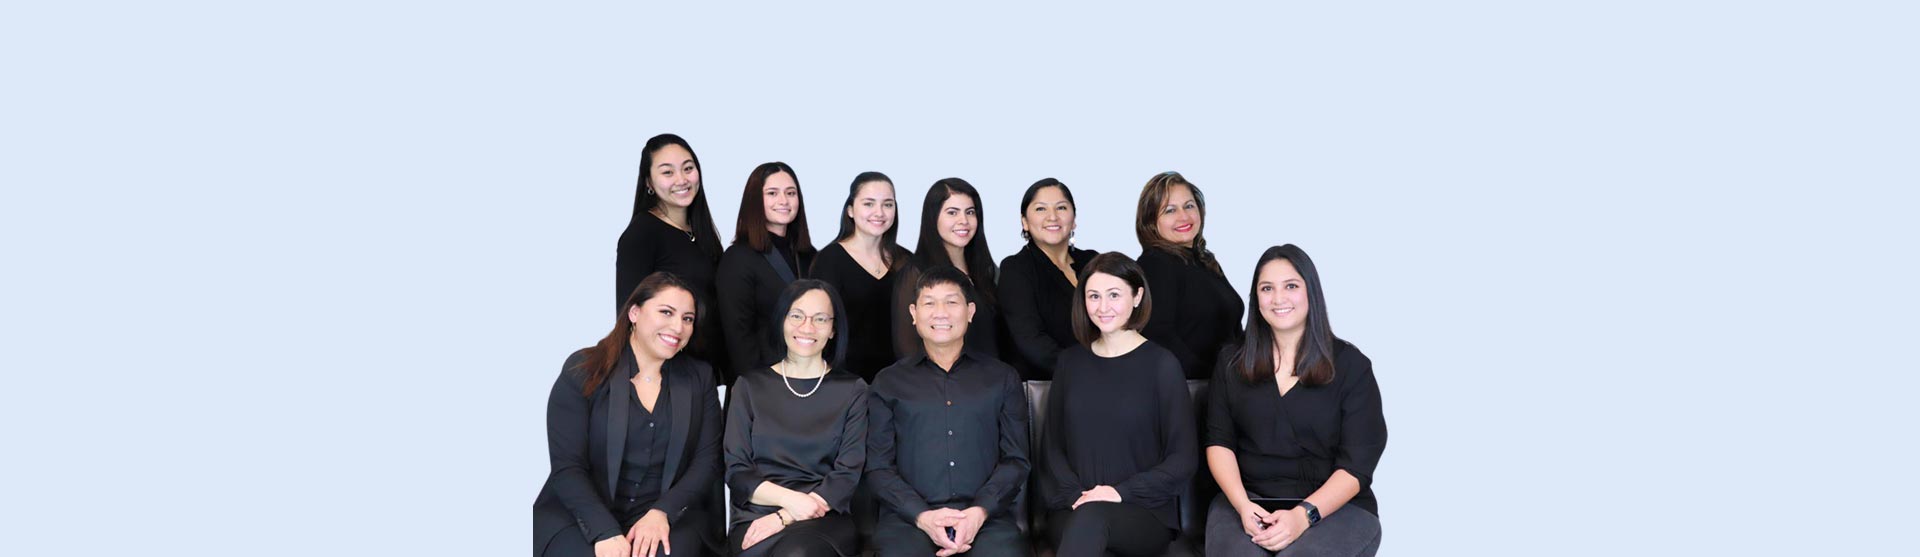 Dental Team at Abel, Phan & Associates